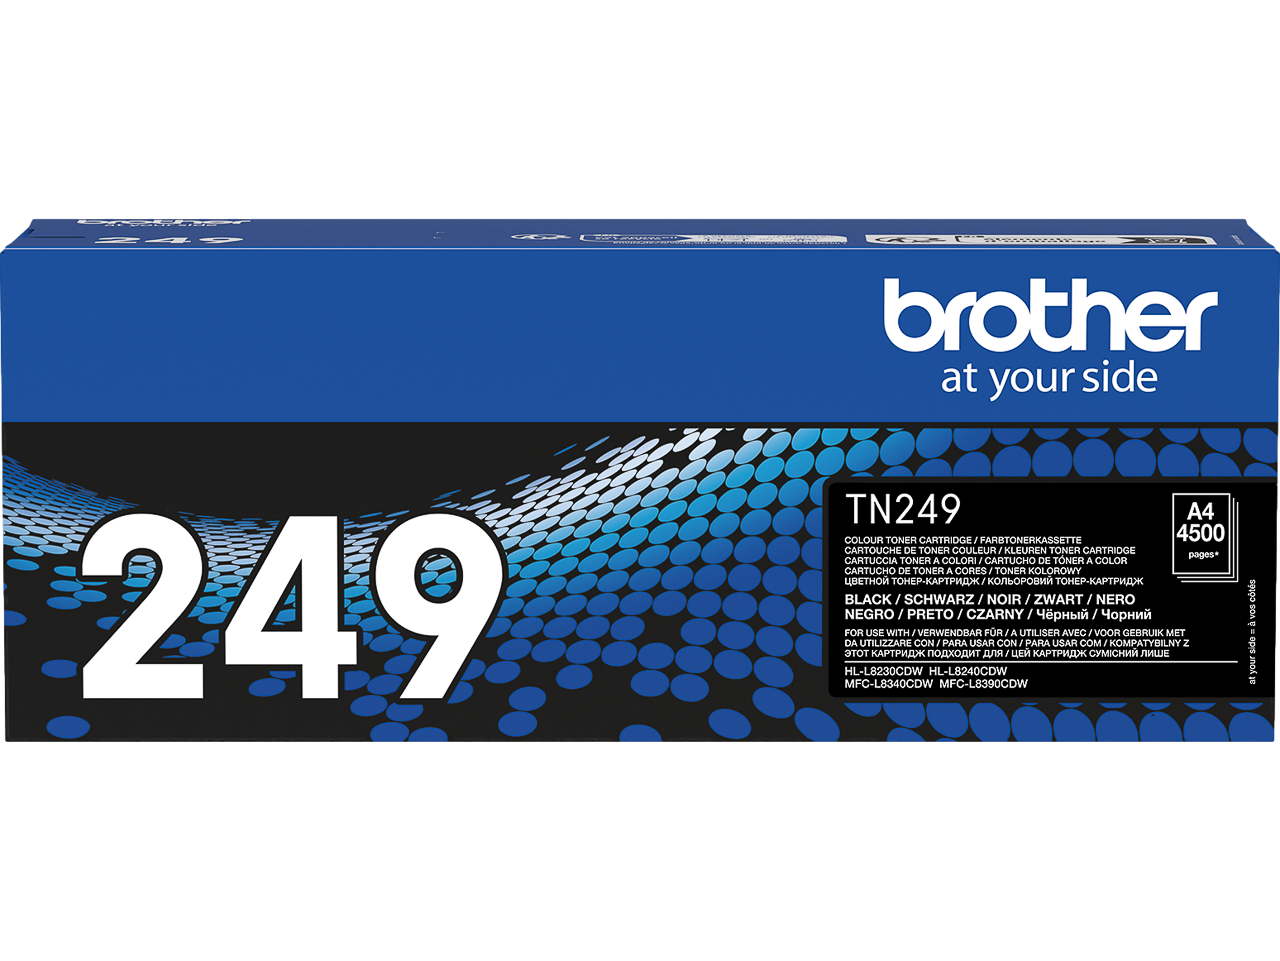 BROTHER HL-L8240cdw Imprimante Laser Couleur (HLL8240CDWRE1)